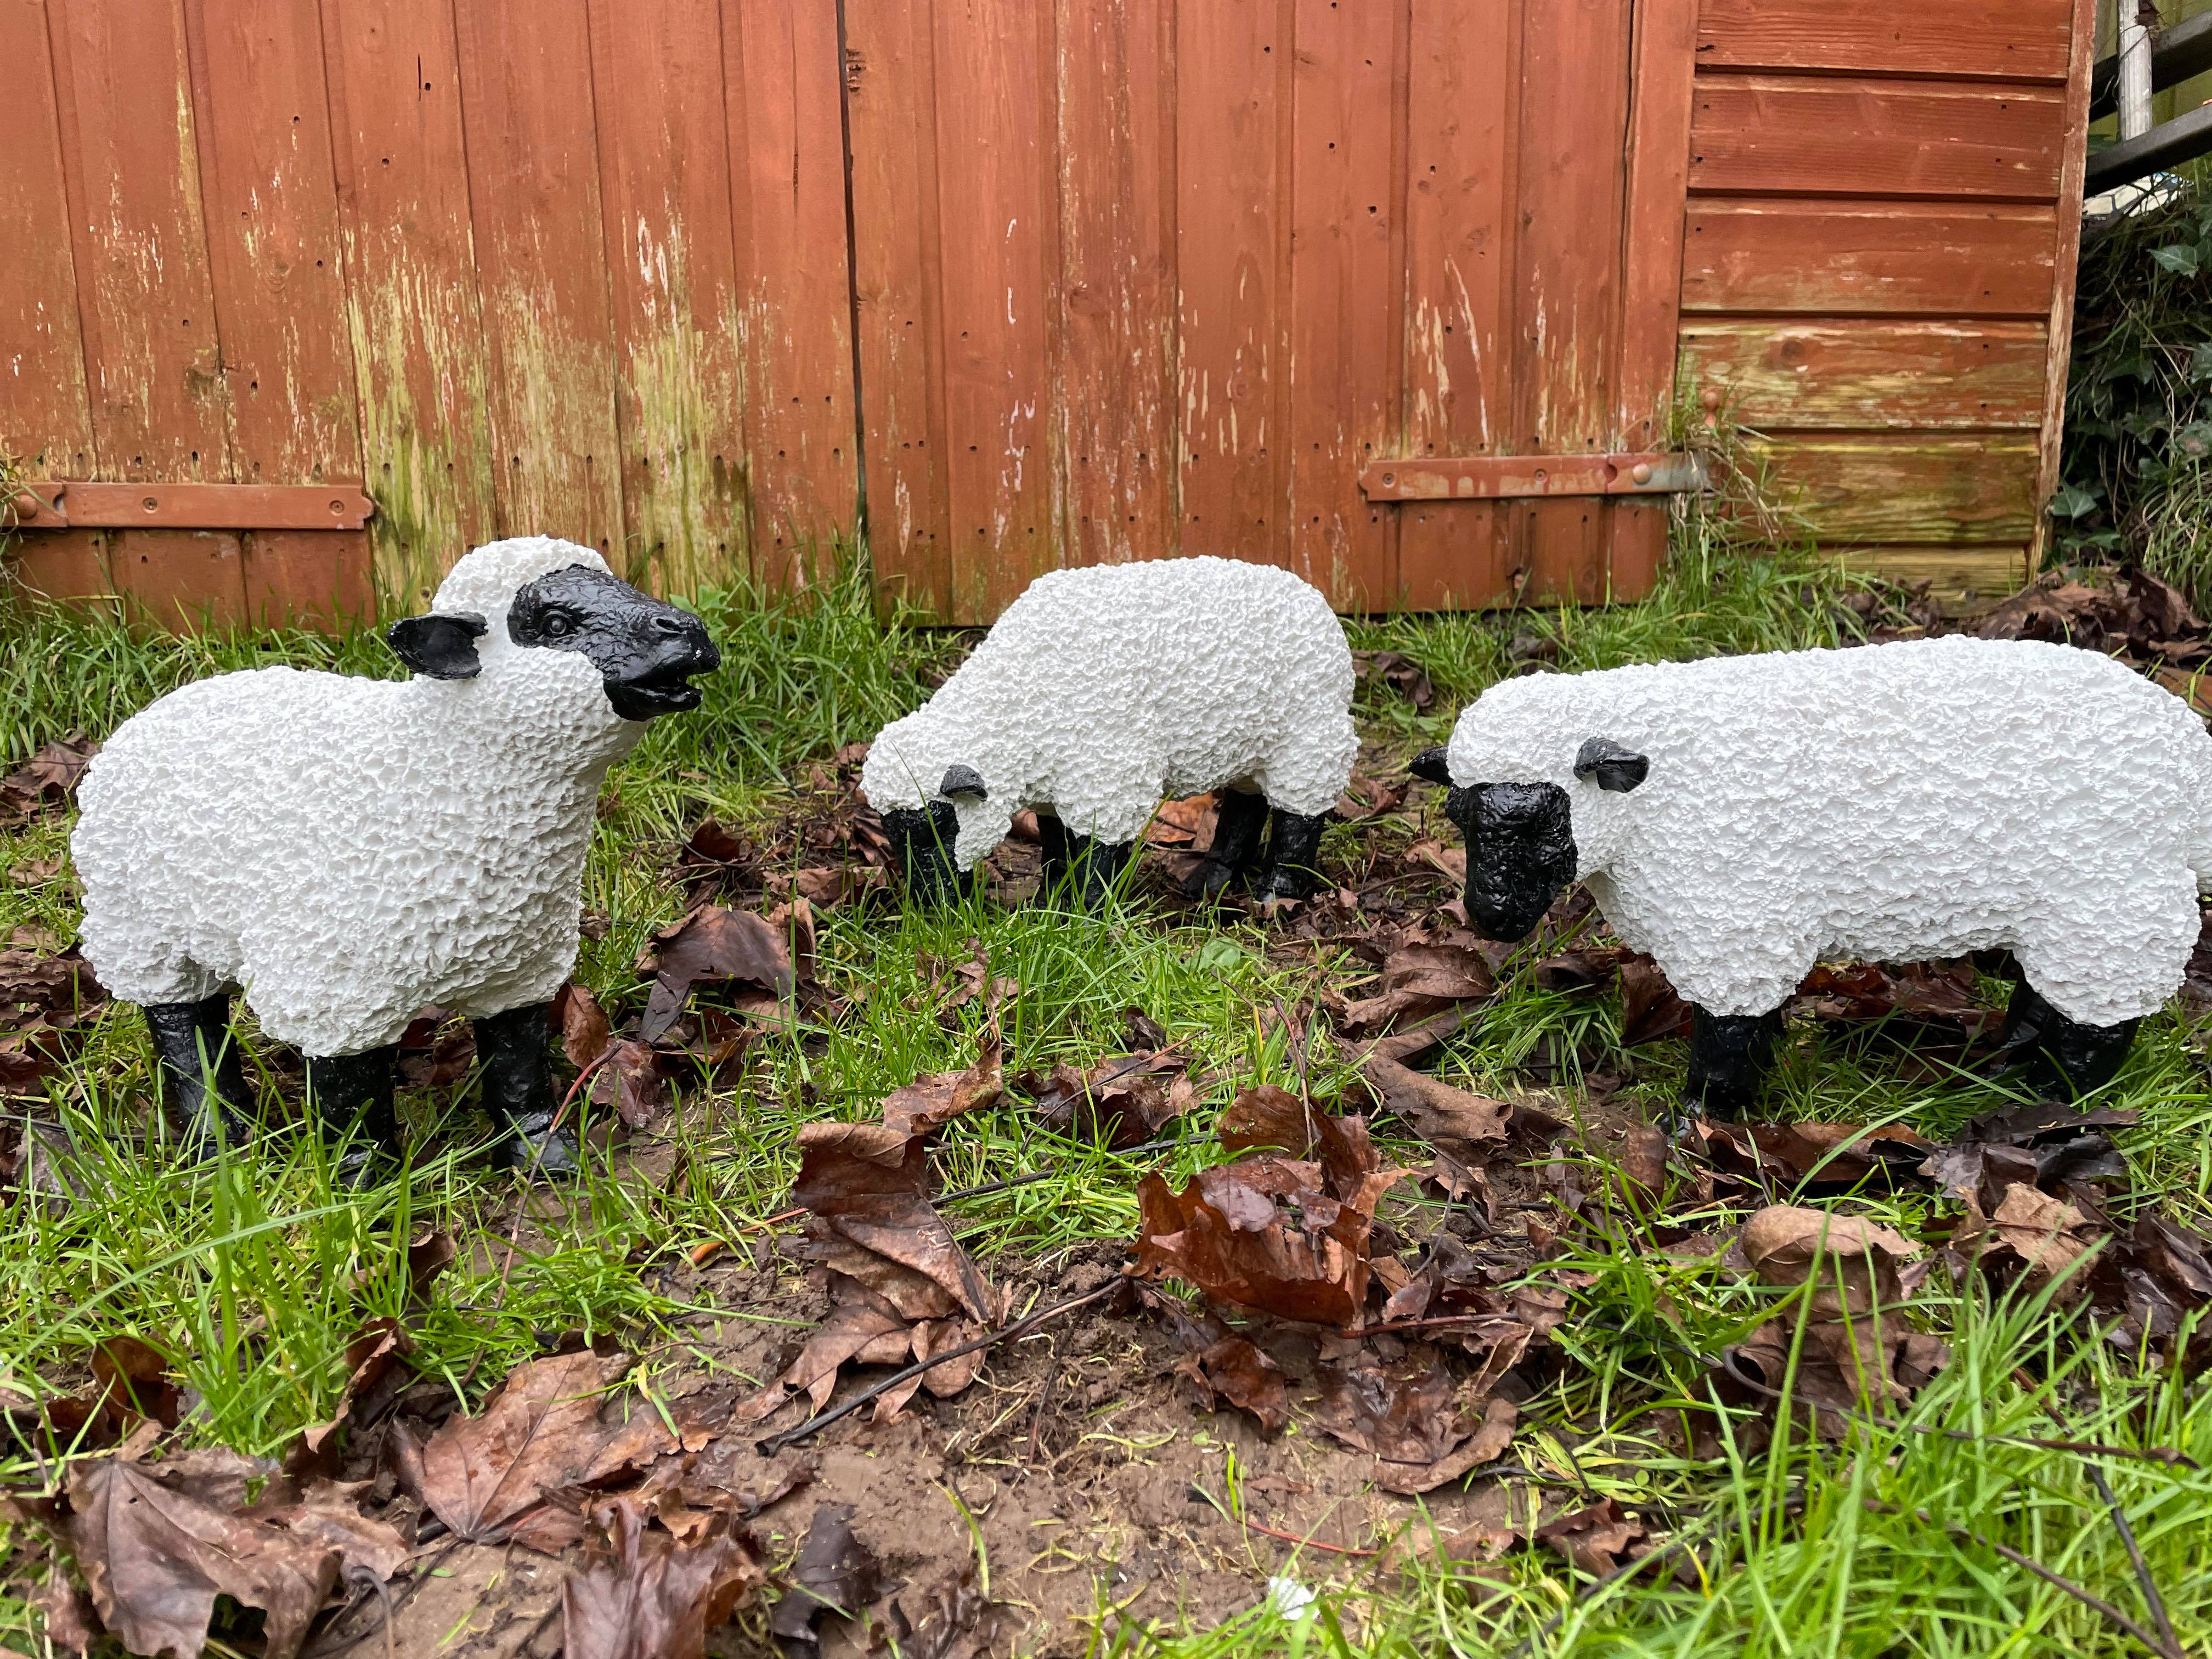 Fuzzy Sheep - Set of 3